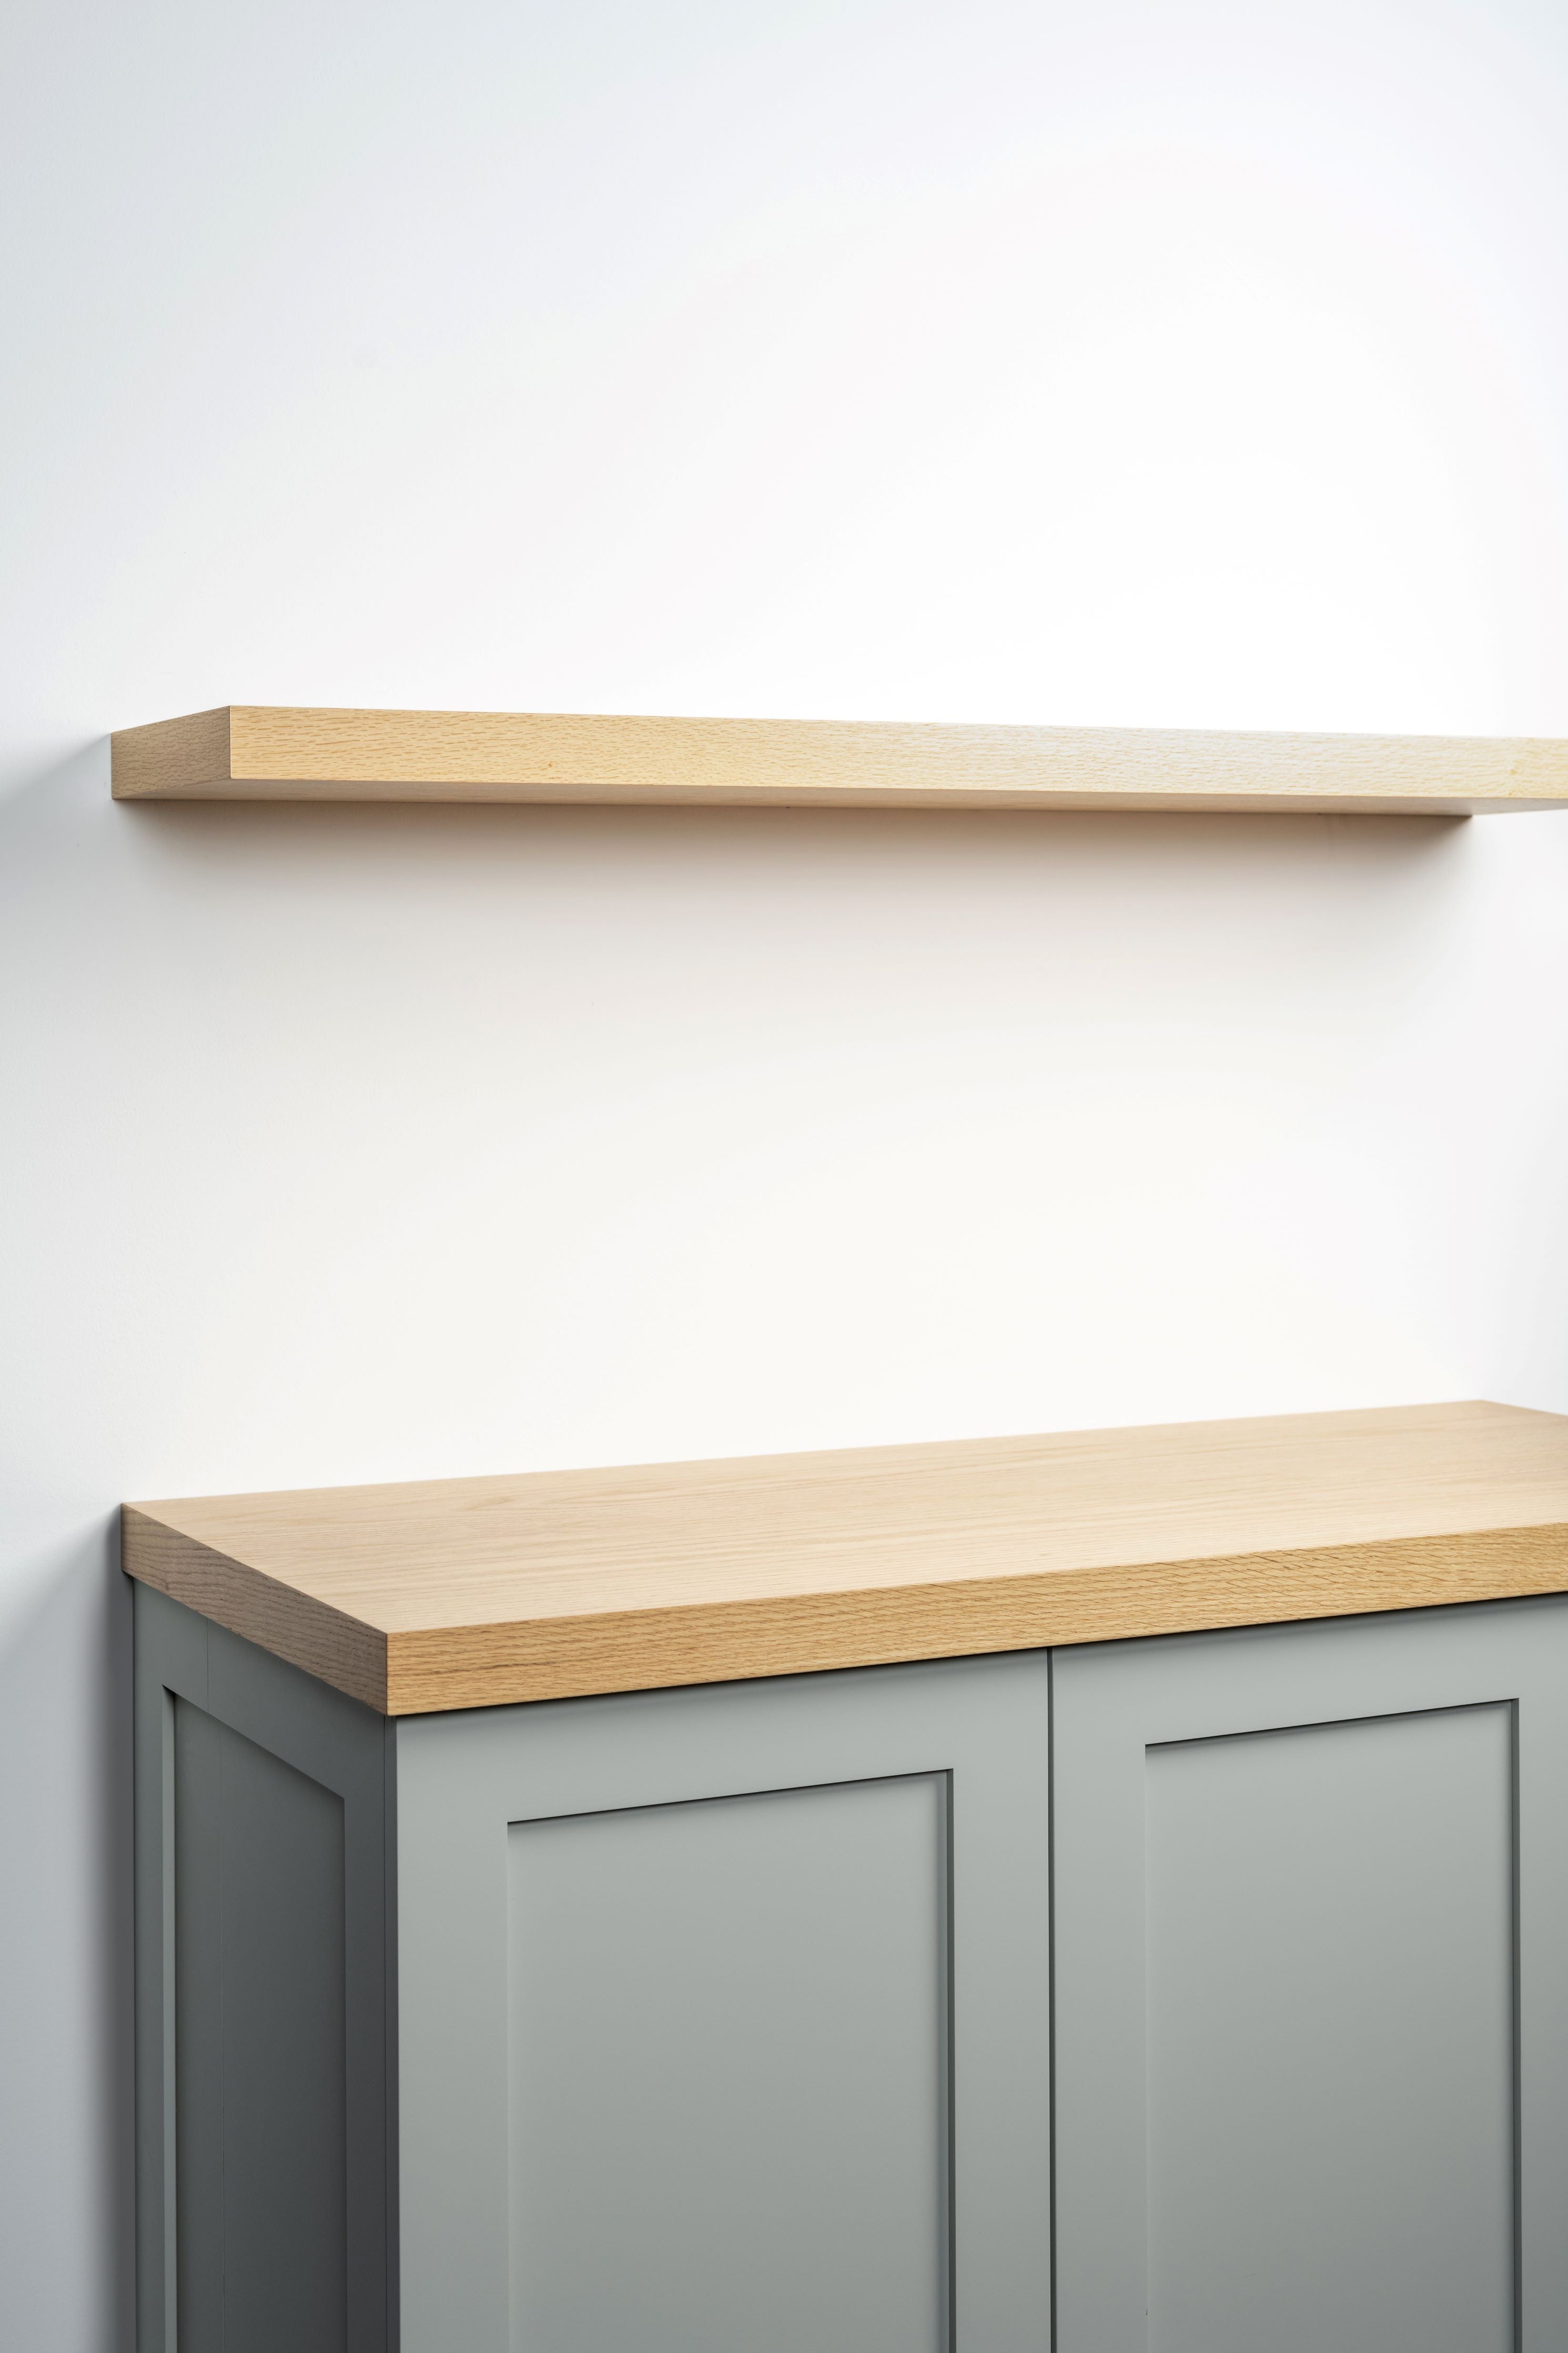 Bleached Oak 4.1-6" thick Cabinet Top / Slab Shelf